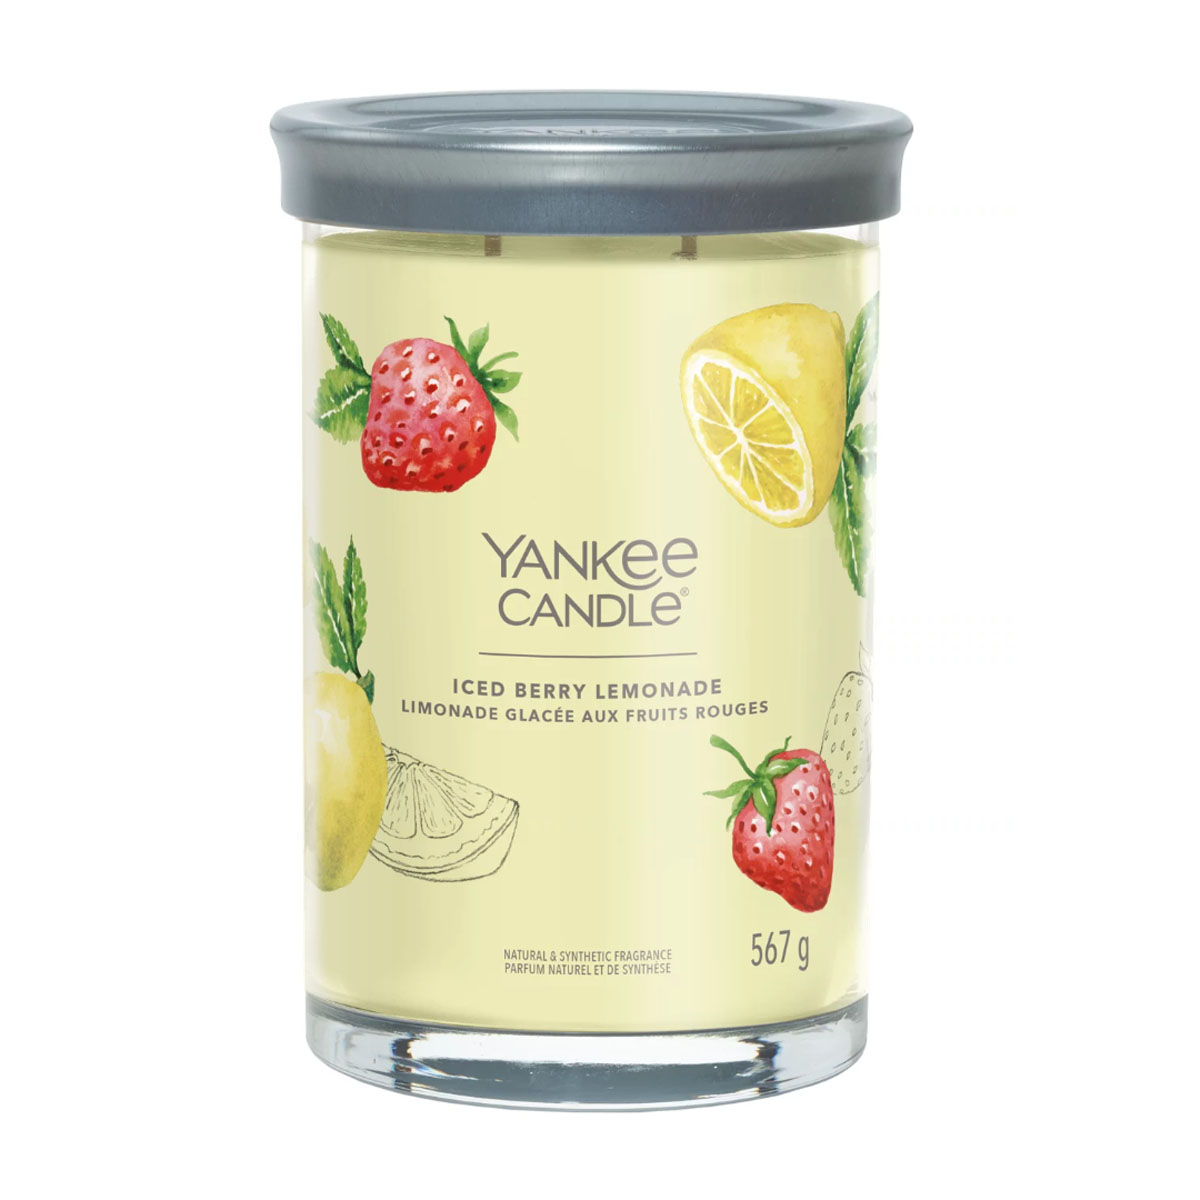 Yankee Candle Signature Linea Iced Berry Lemonade